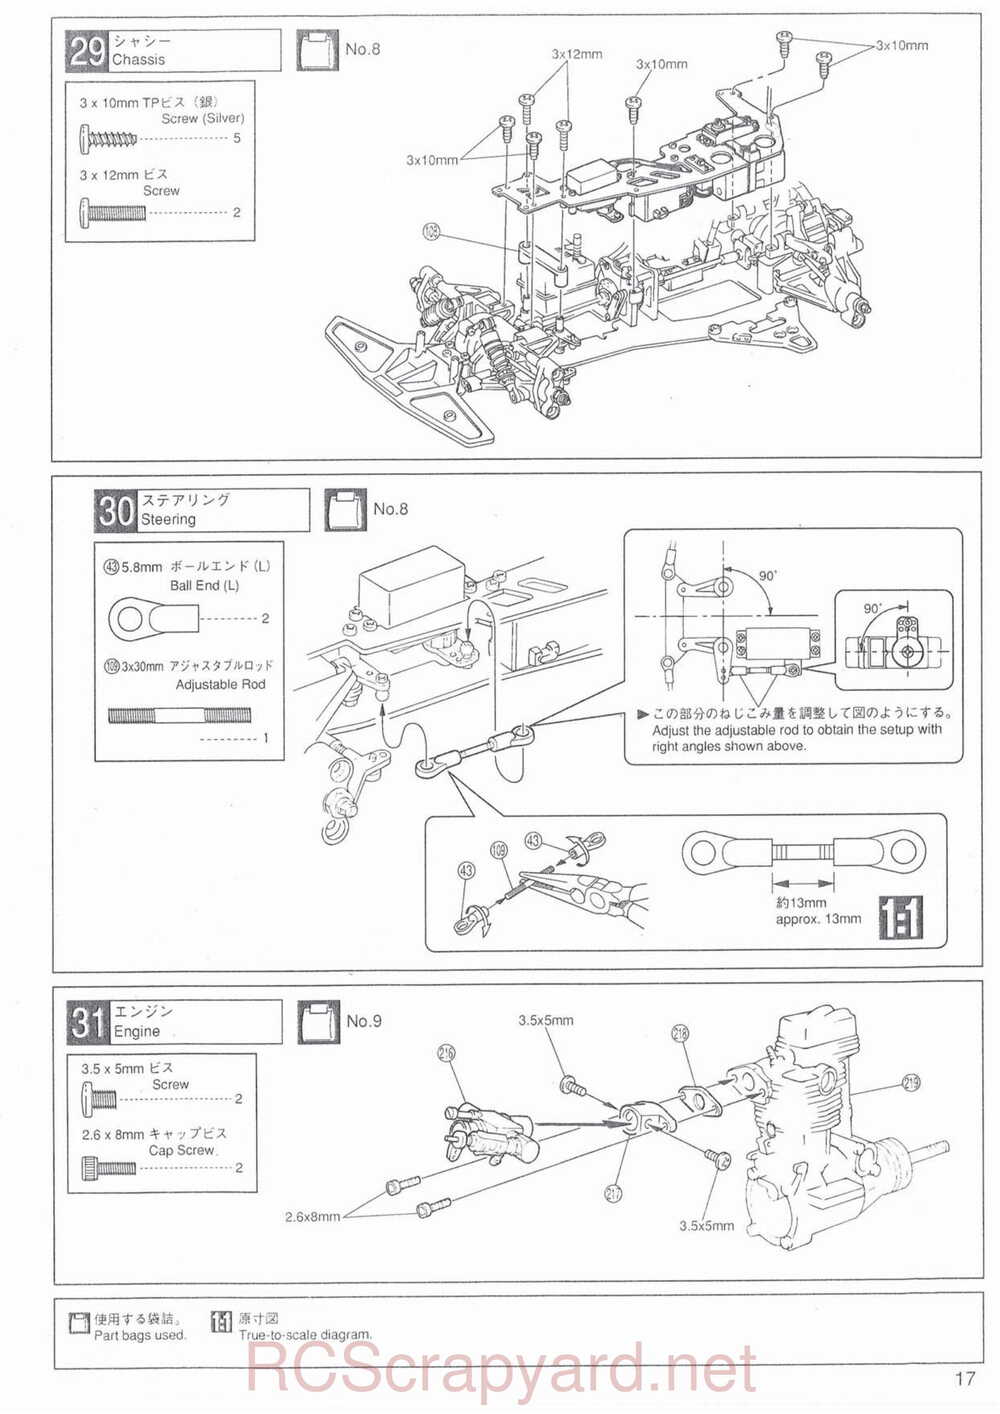 Kyosho - 31701 - Superten-Four FW-03 - Manual - Page 17